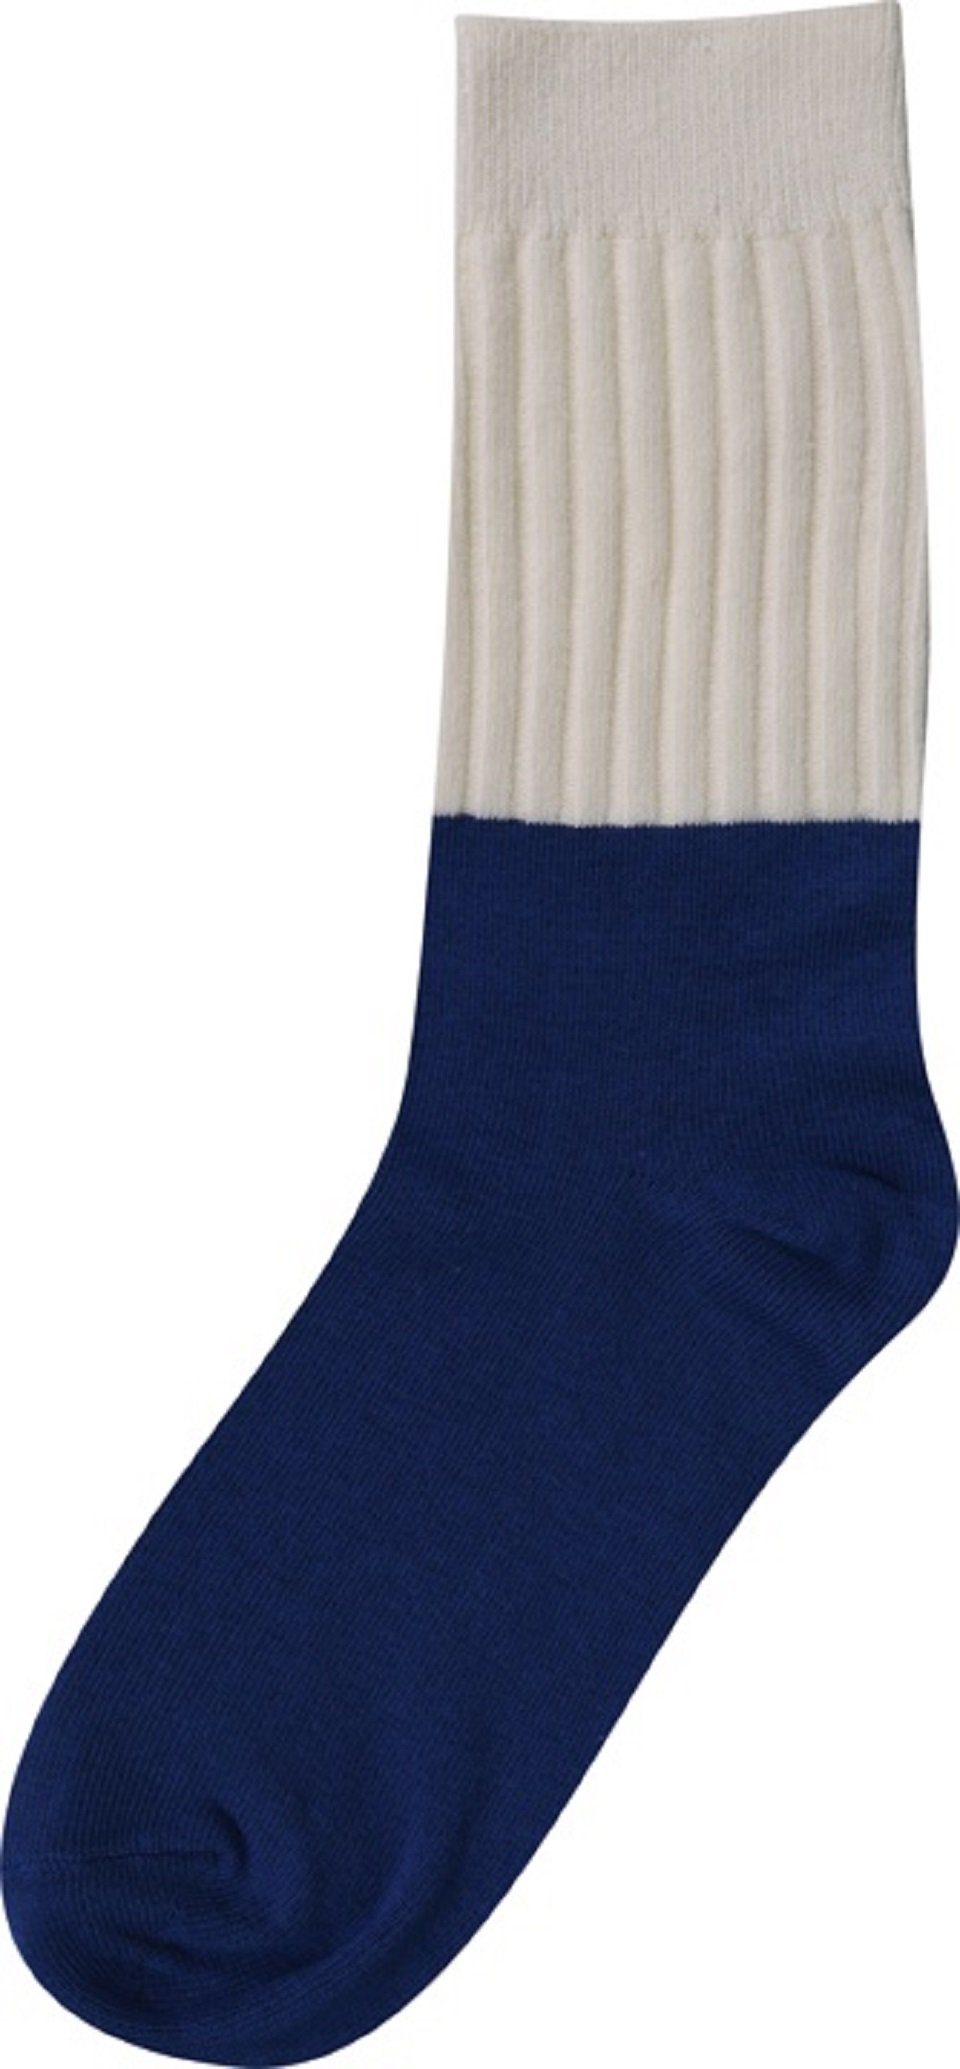 Capelli Socken Socken 2x Unisex blau York New